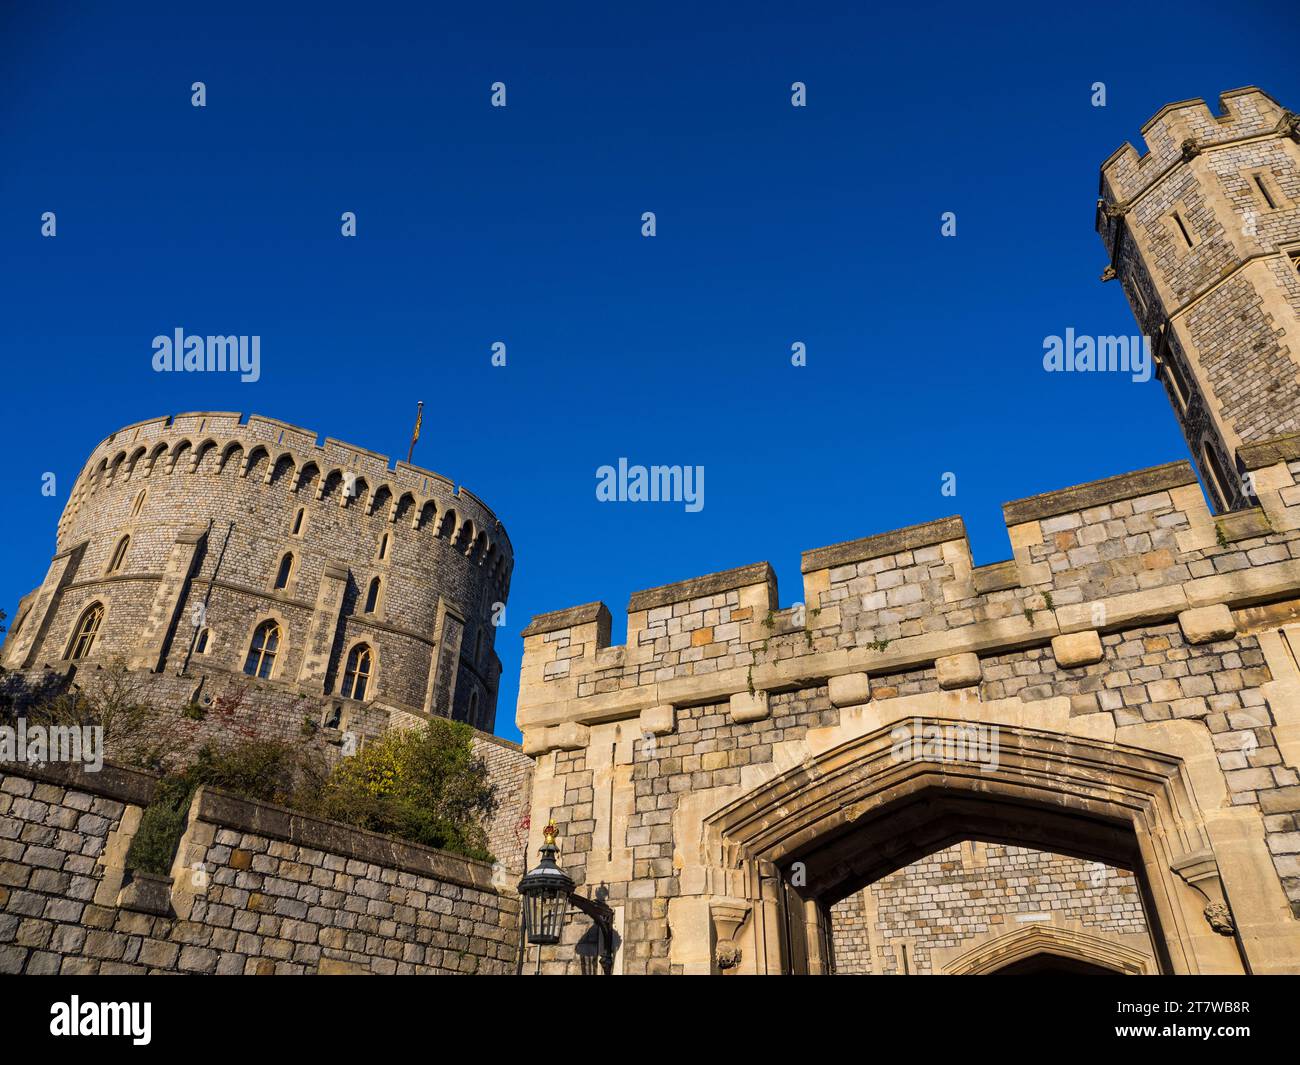 The Round Tower (Links), St Georges Gateway (Zentrum), King Edward Tower (Rechts), Windsor Castle, Windsor, Berkshire, England, GROSSBRITANNIEN, GB. Stockfoto